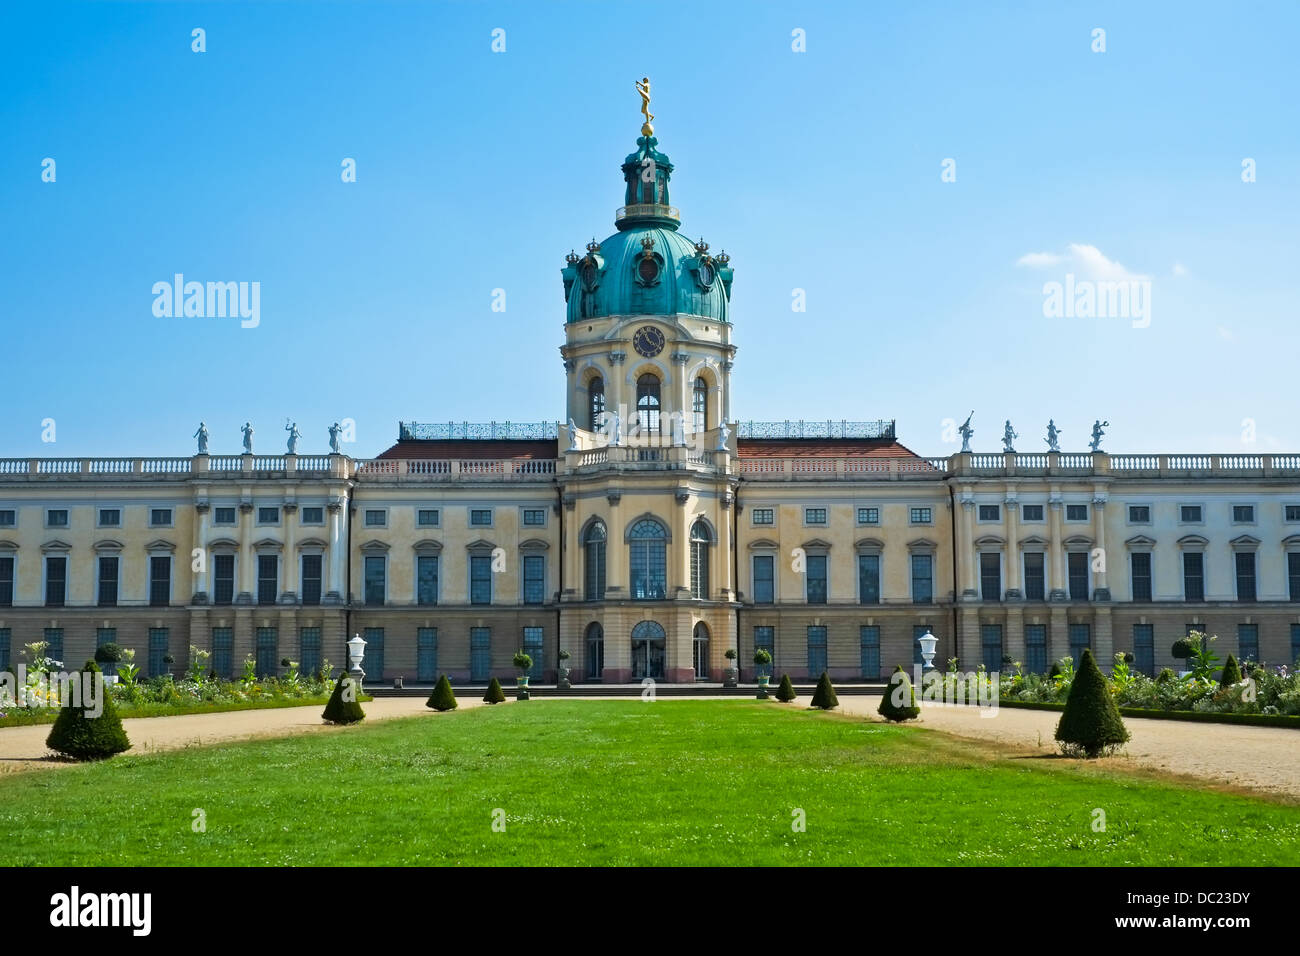 Schloss Charlottenburg palace park Berlin Germany Stock Photo